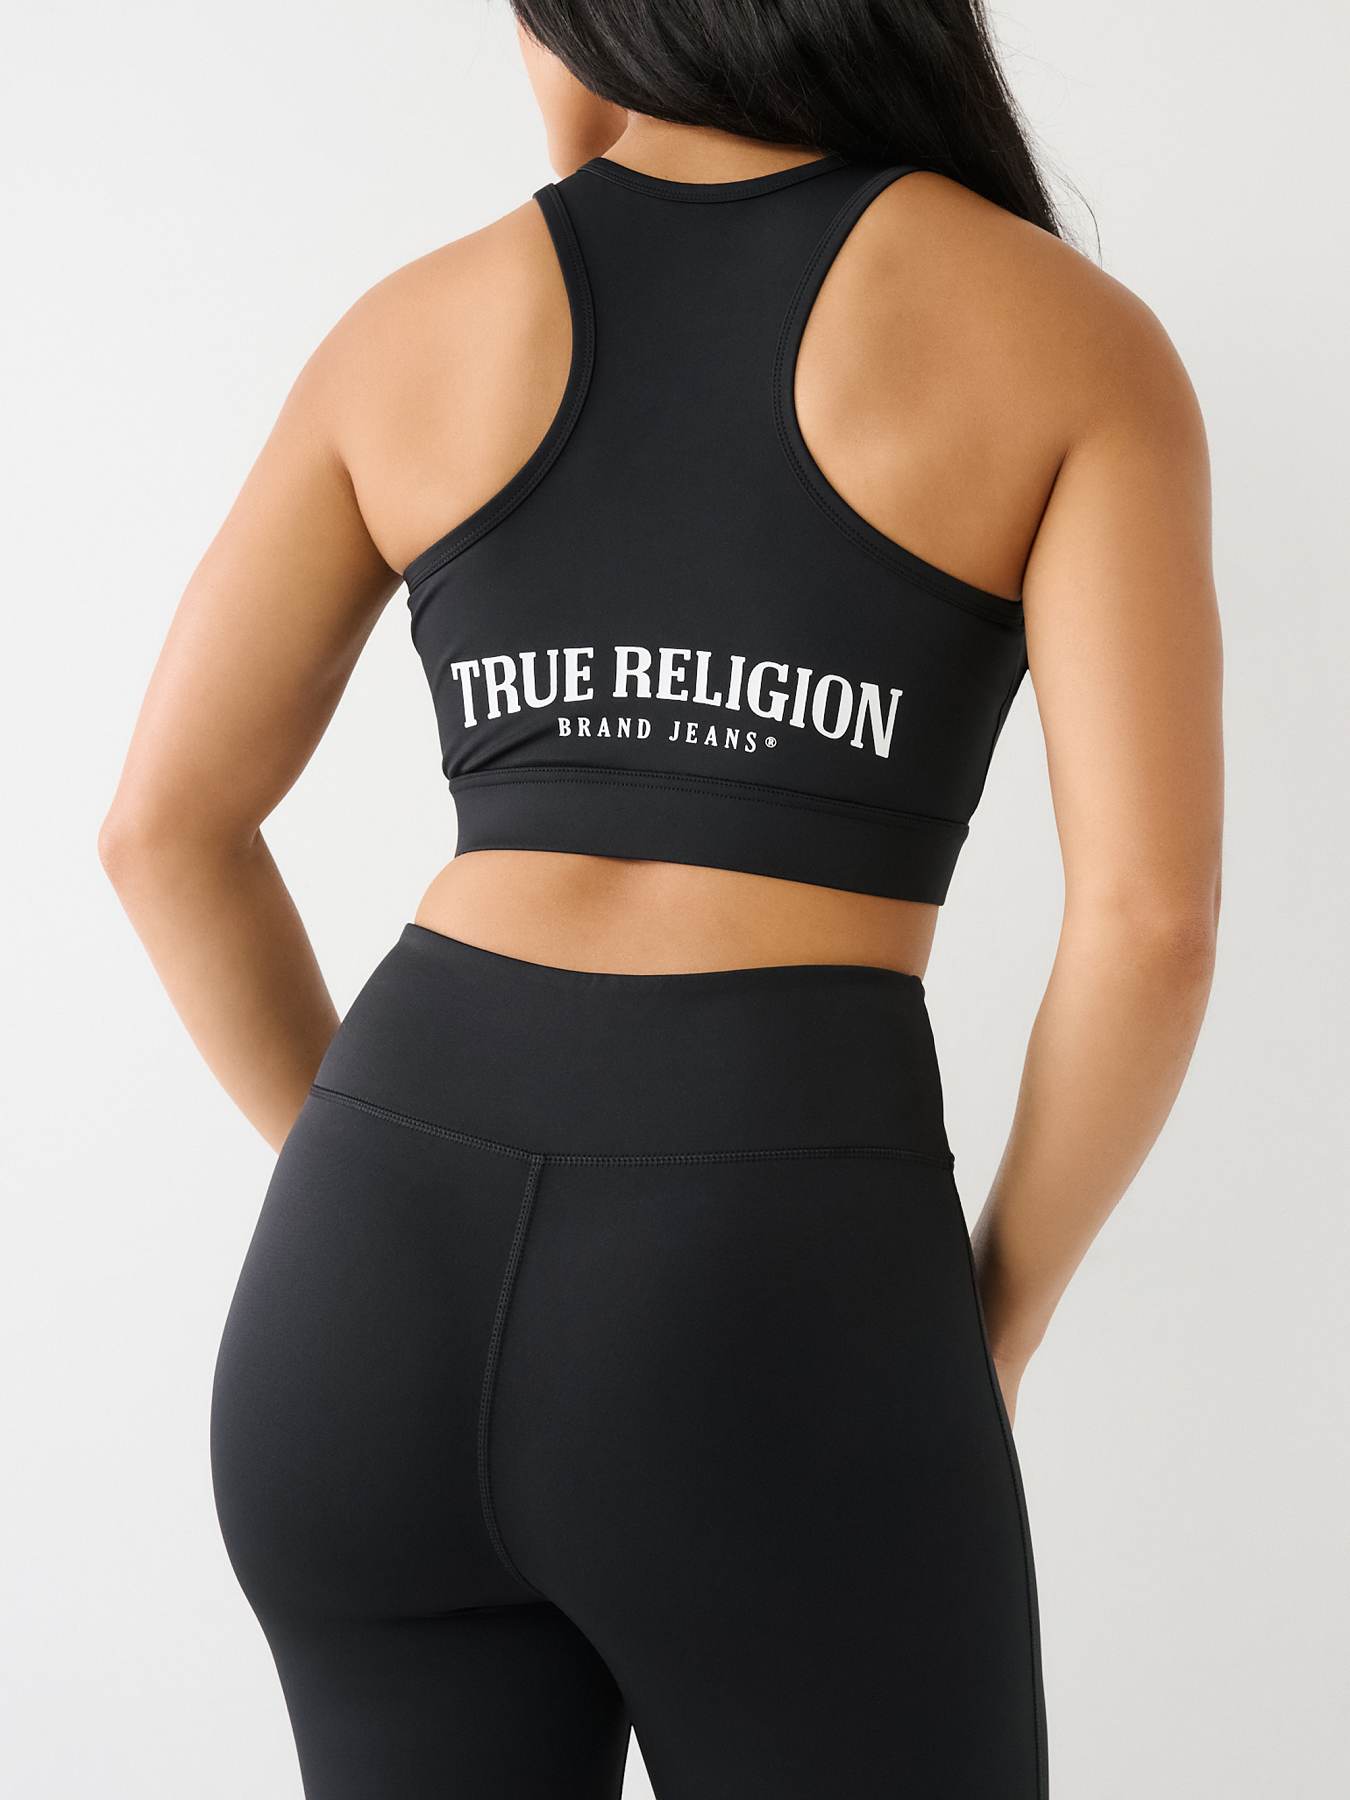 True Religion Sports Bra Yoga Athletic Stretch Active Size XL - NEW 